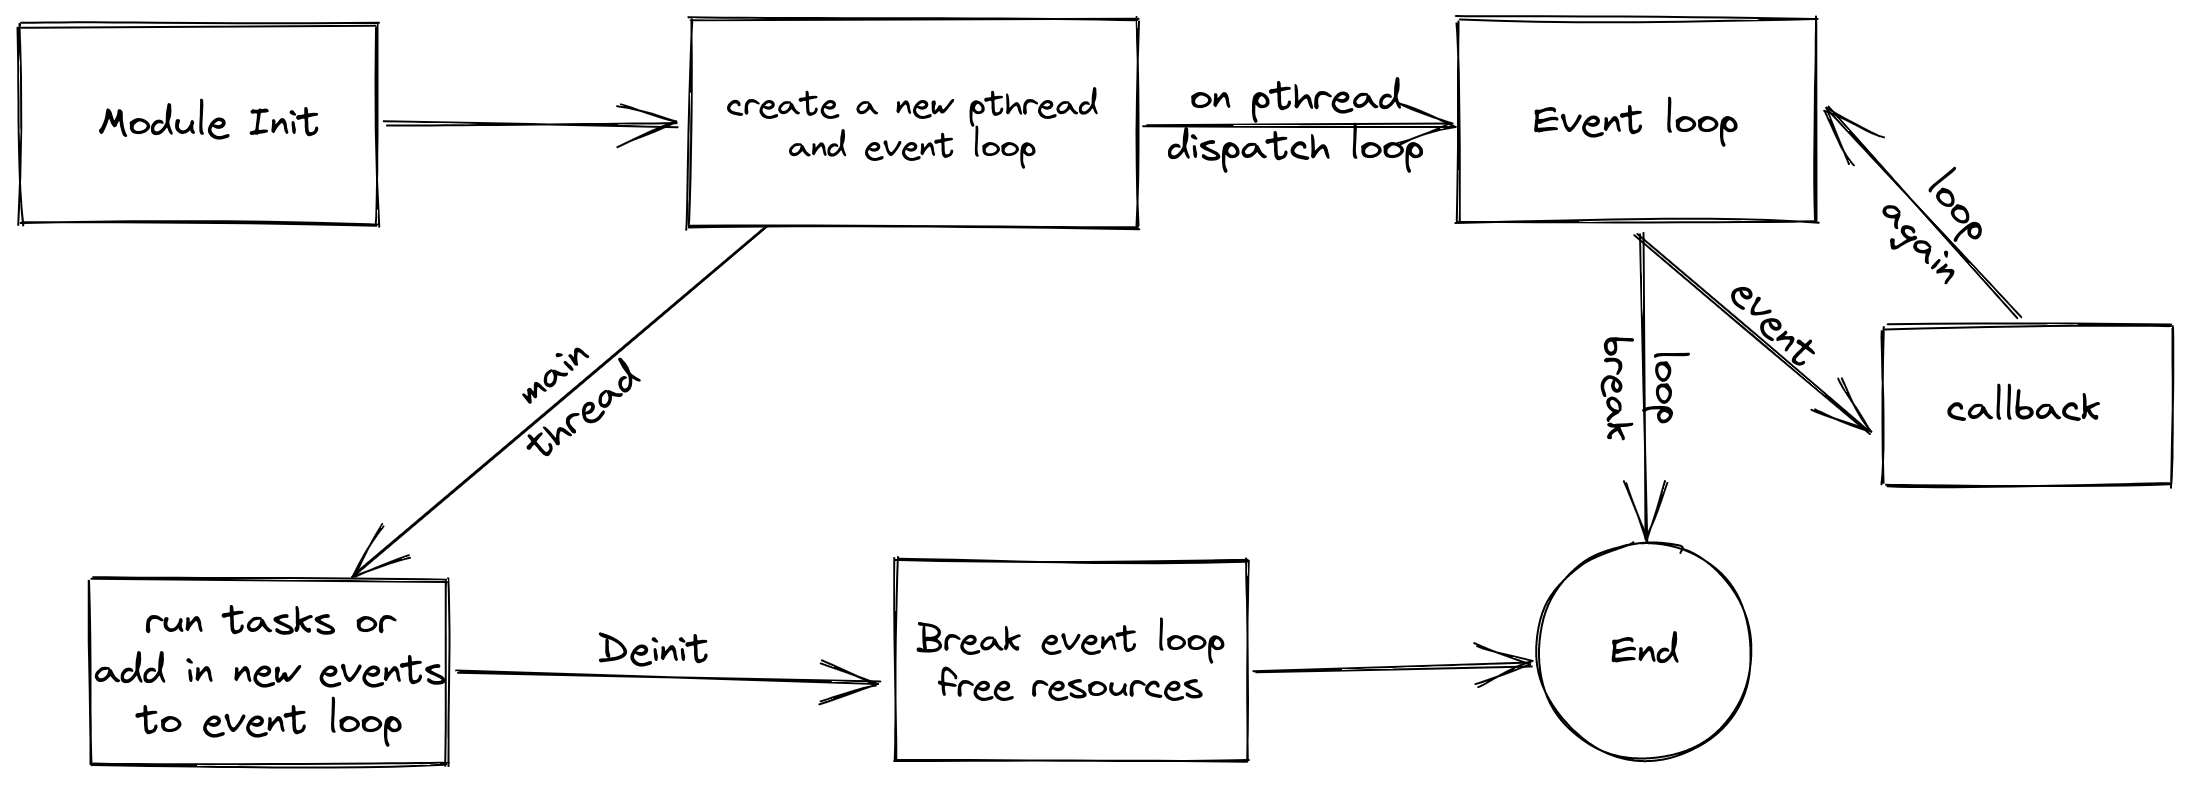 event loop.png